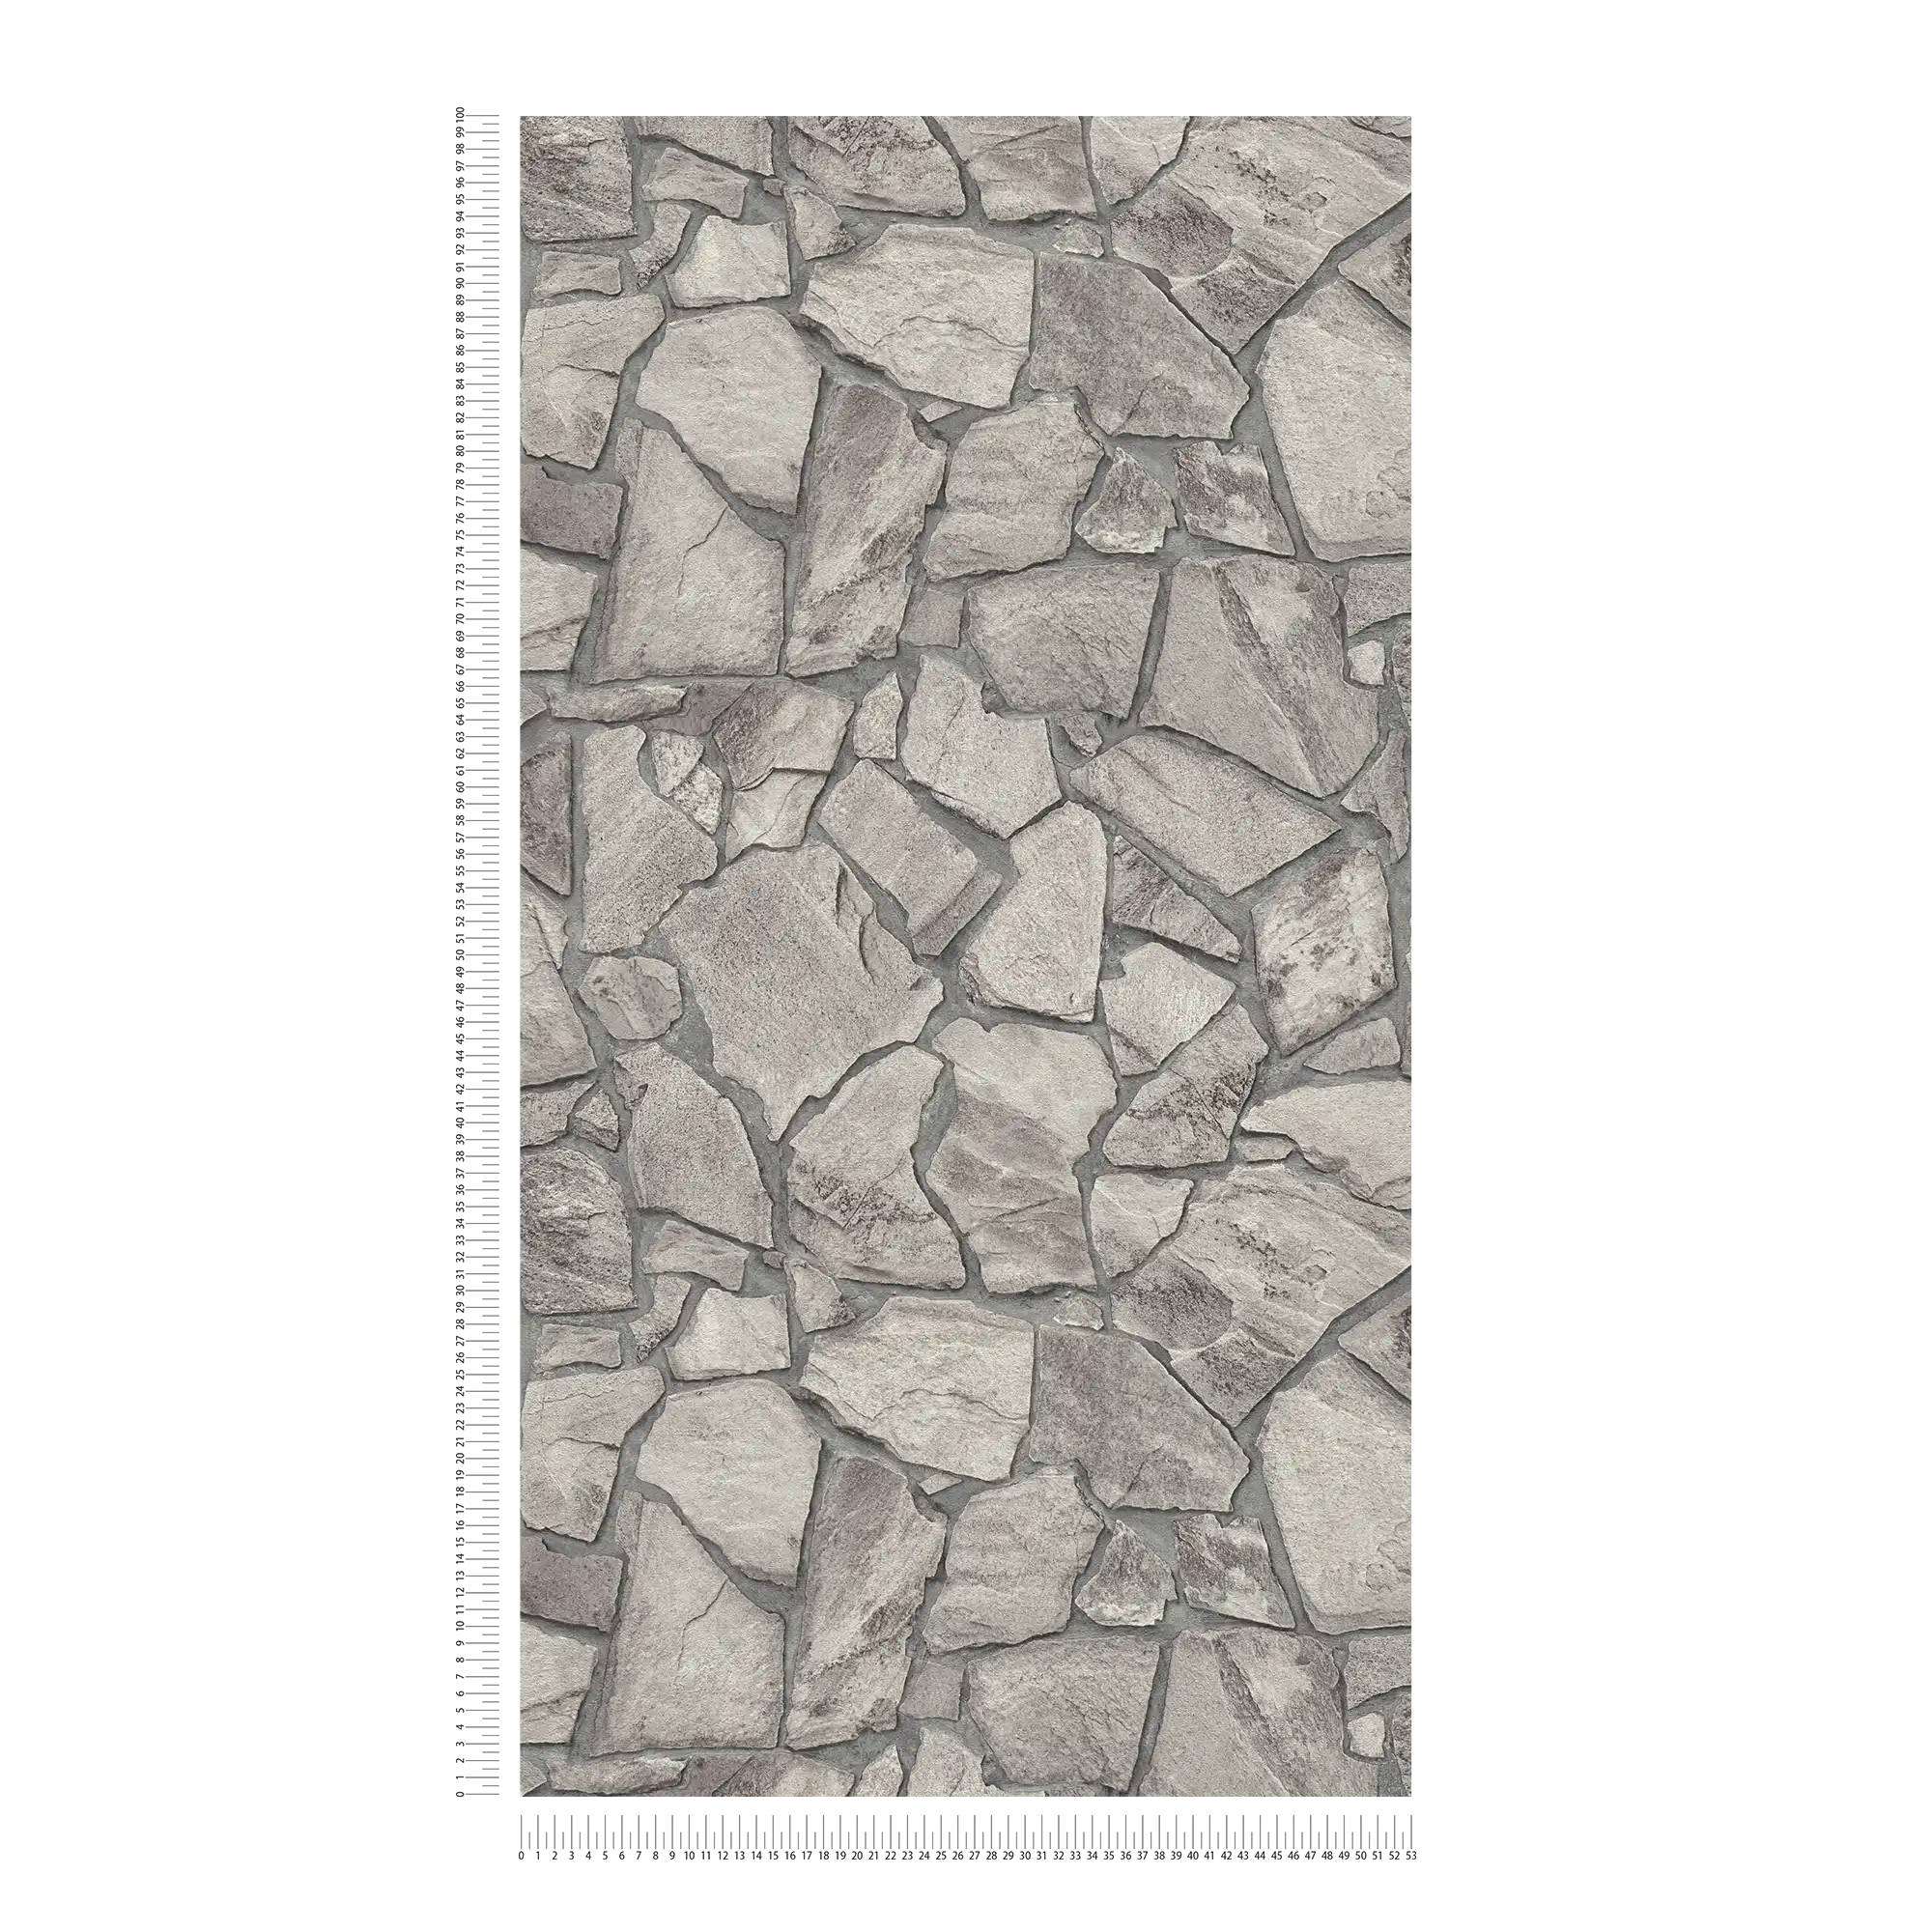             Naturstein Mauerwerk Vliestapete 3D-Optik – Grau, Grau
        